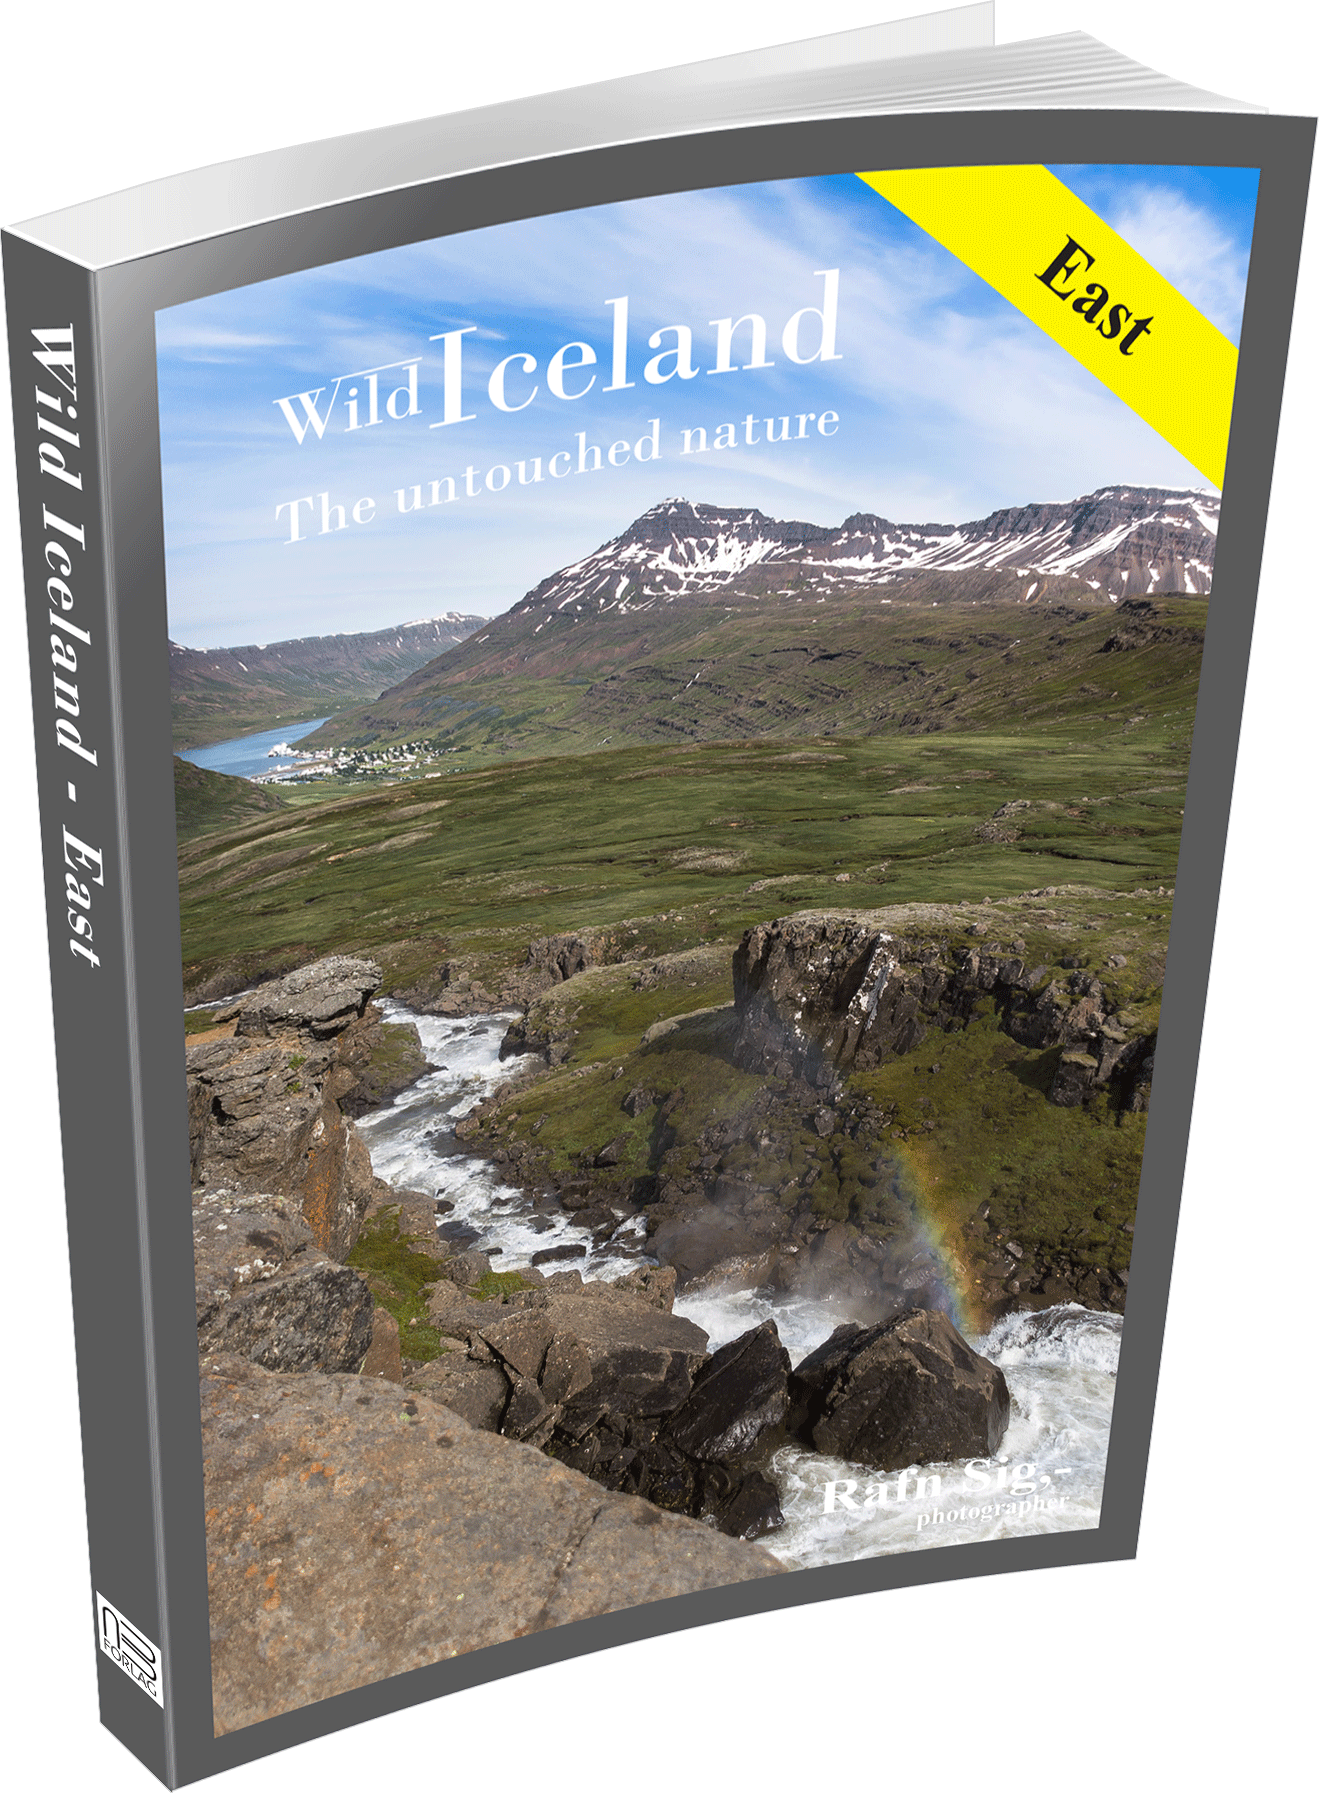 Look inside East -Wild Iceland